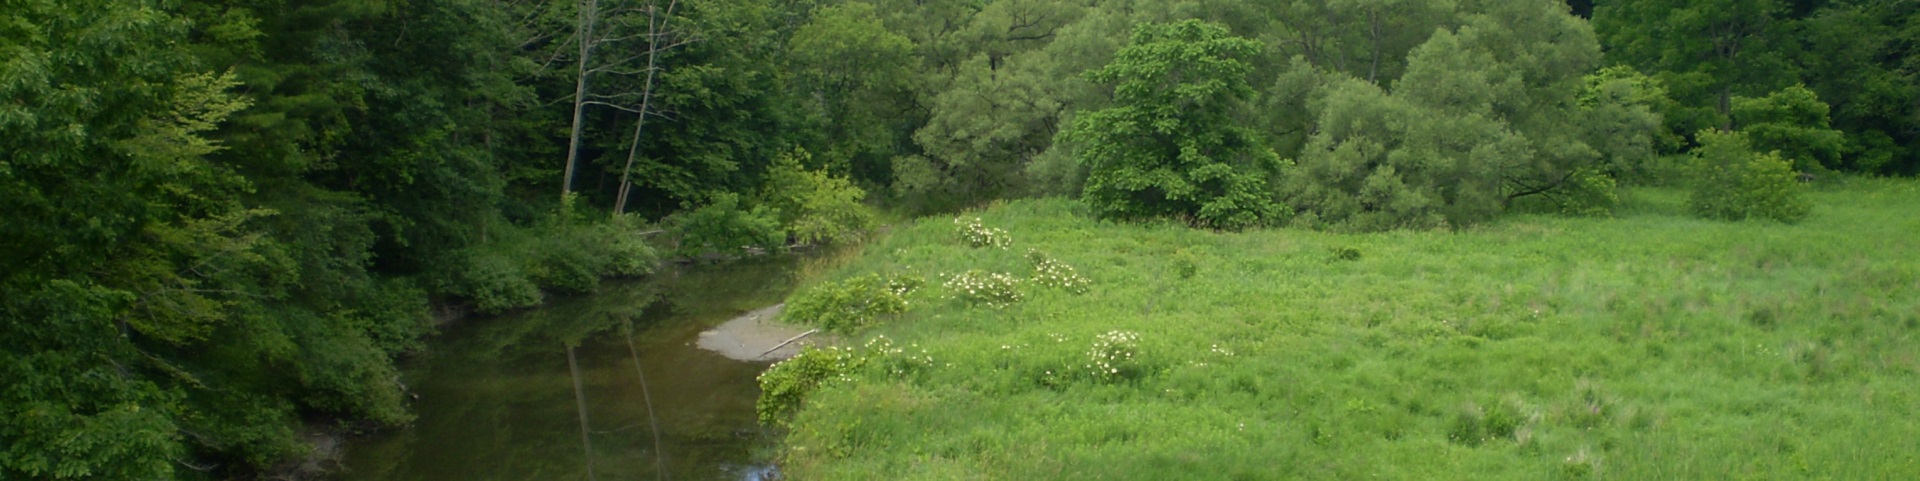 Petticoat Creek in summer